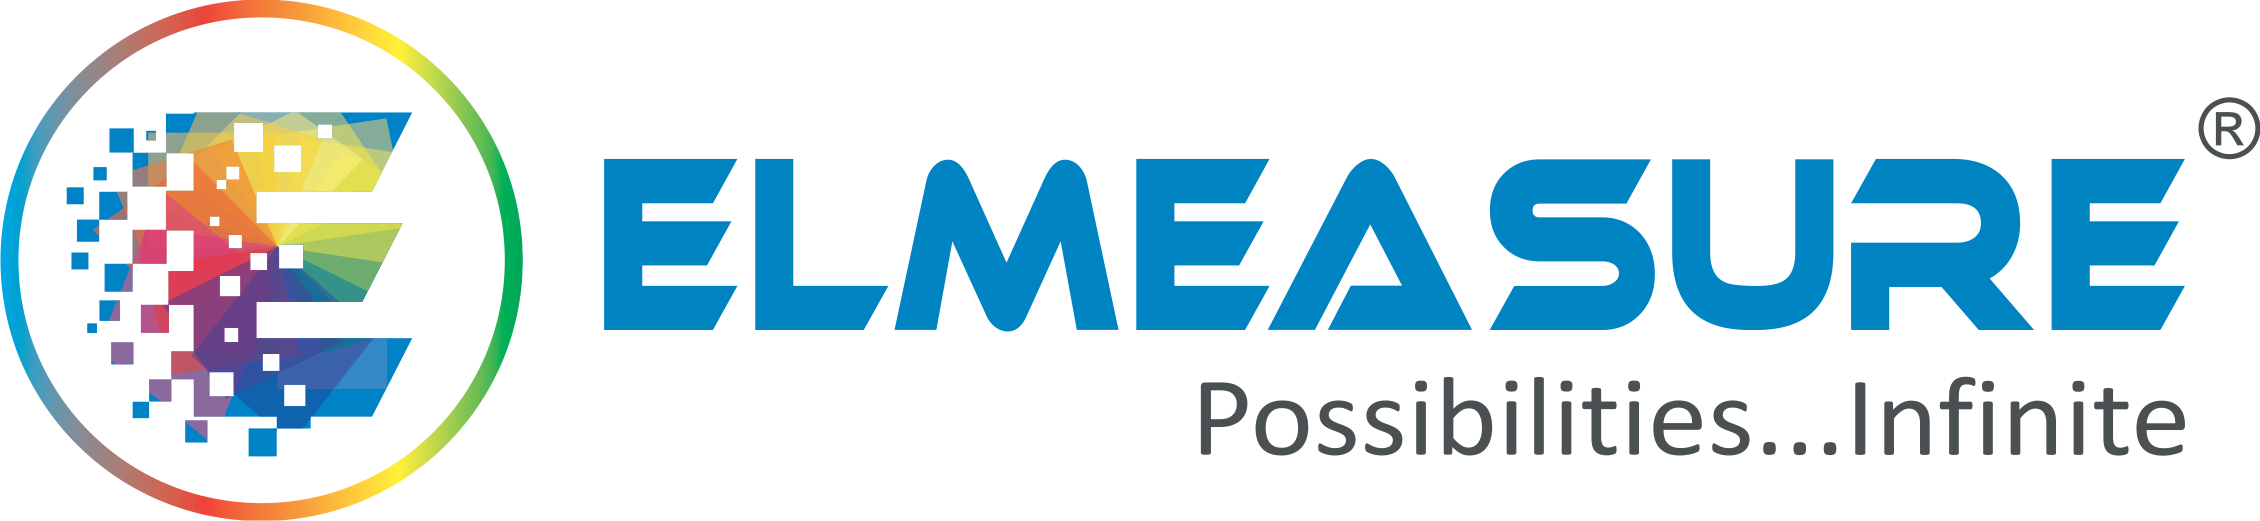 elmeasure logo